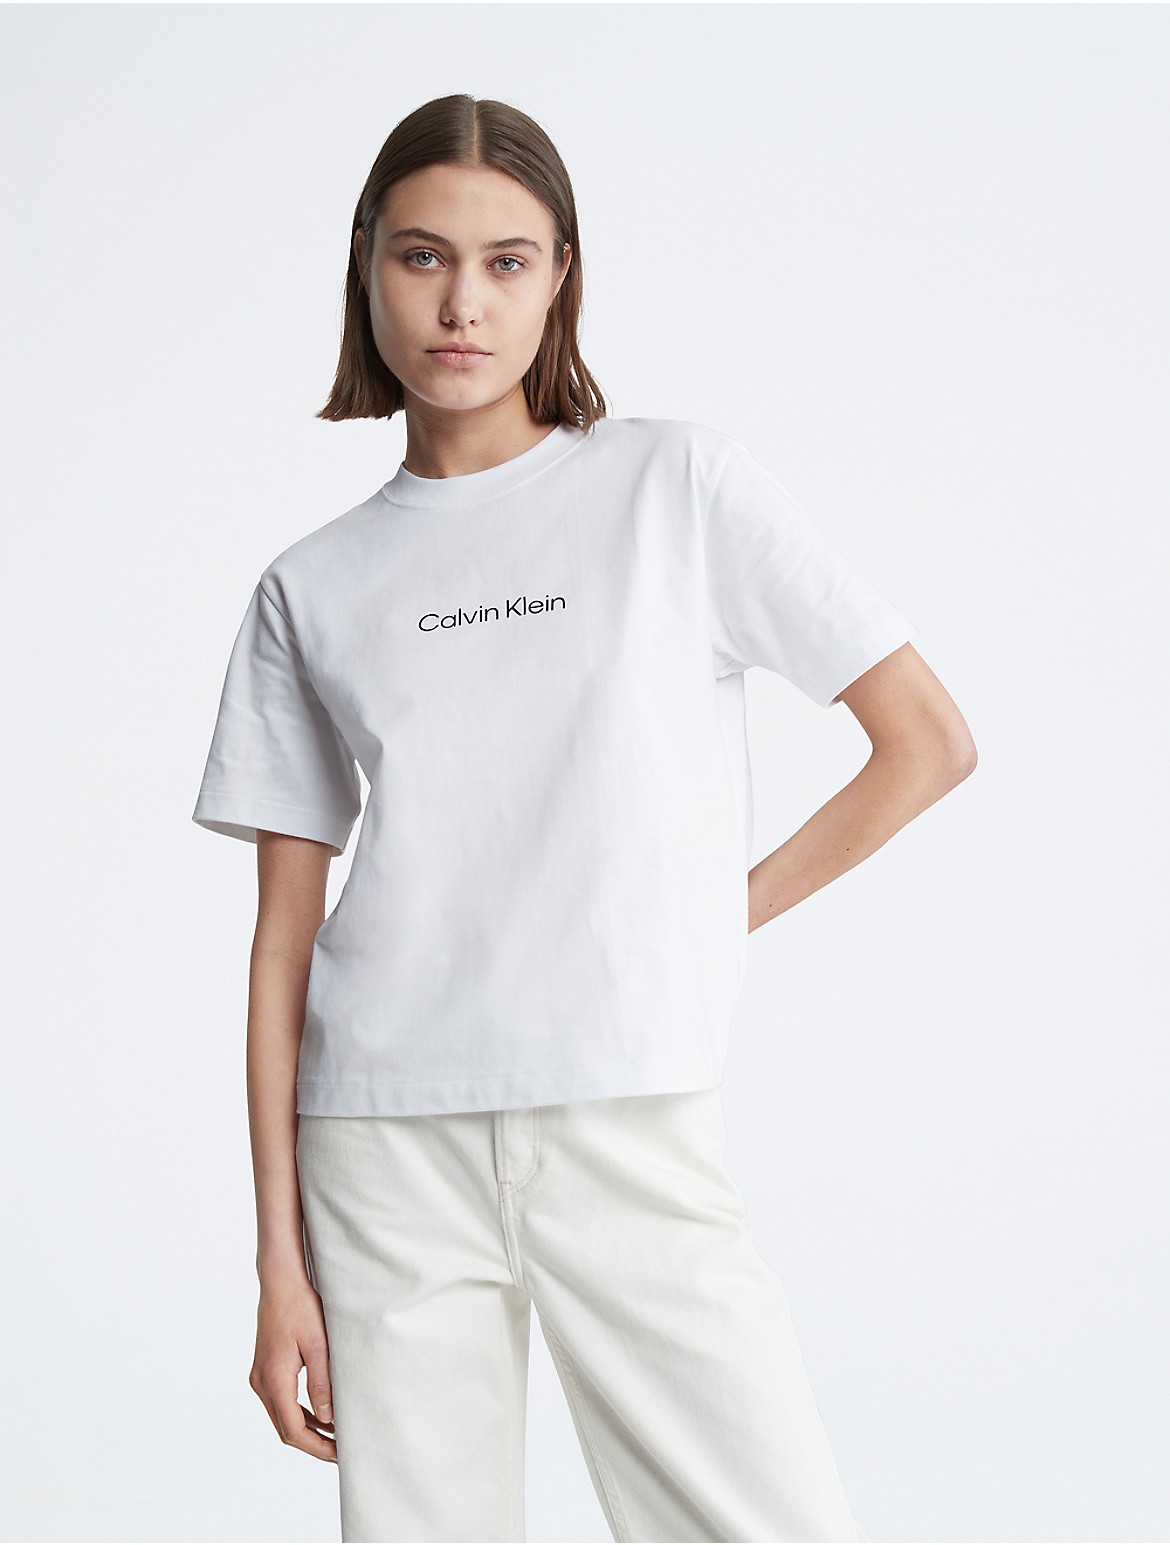 Calvin Klein Women's Relaxed Fit Standard Logo Crewneck T-Shirt - White - XS